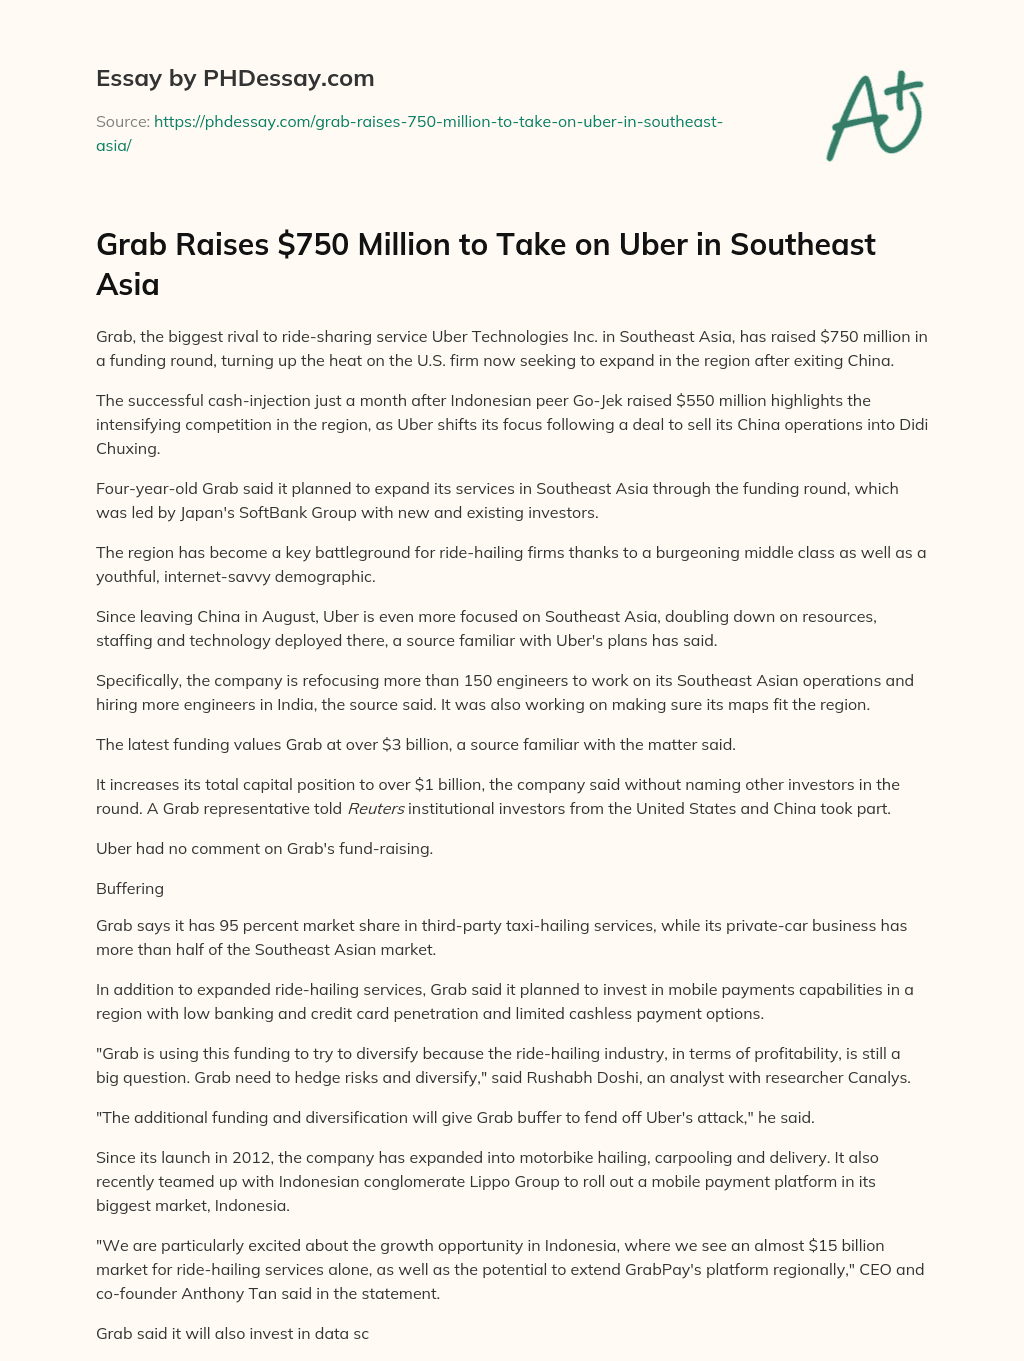 Grab Raises $750 Million to Take on Uber in Southeast Asia essay